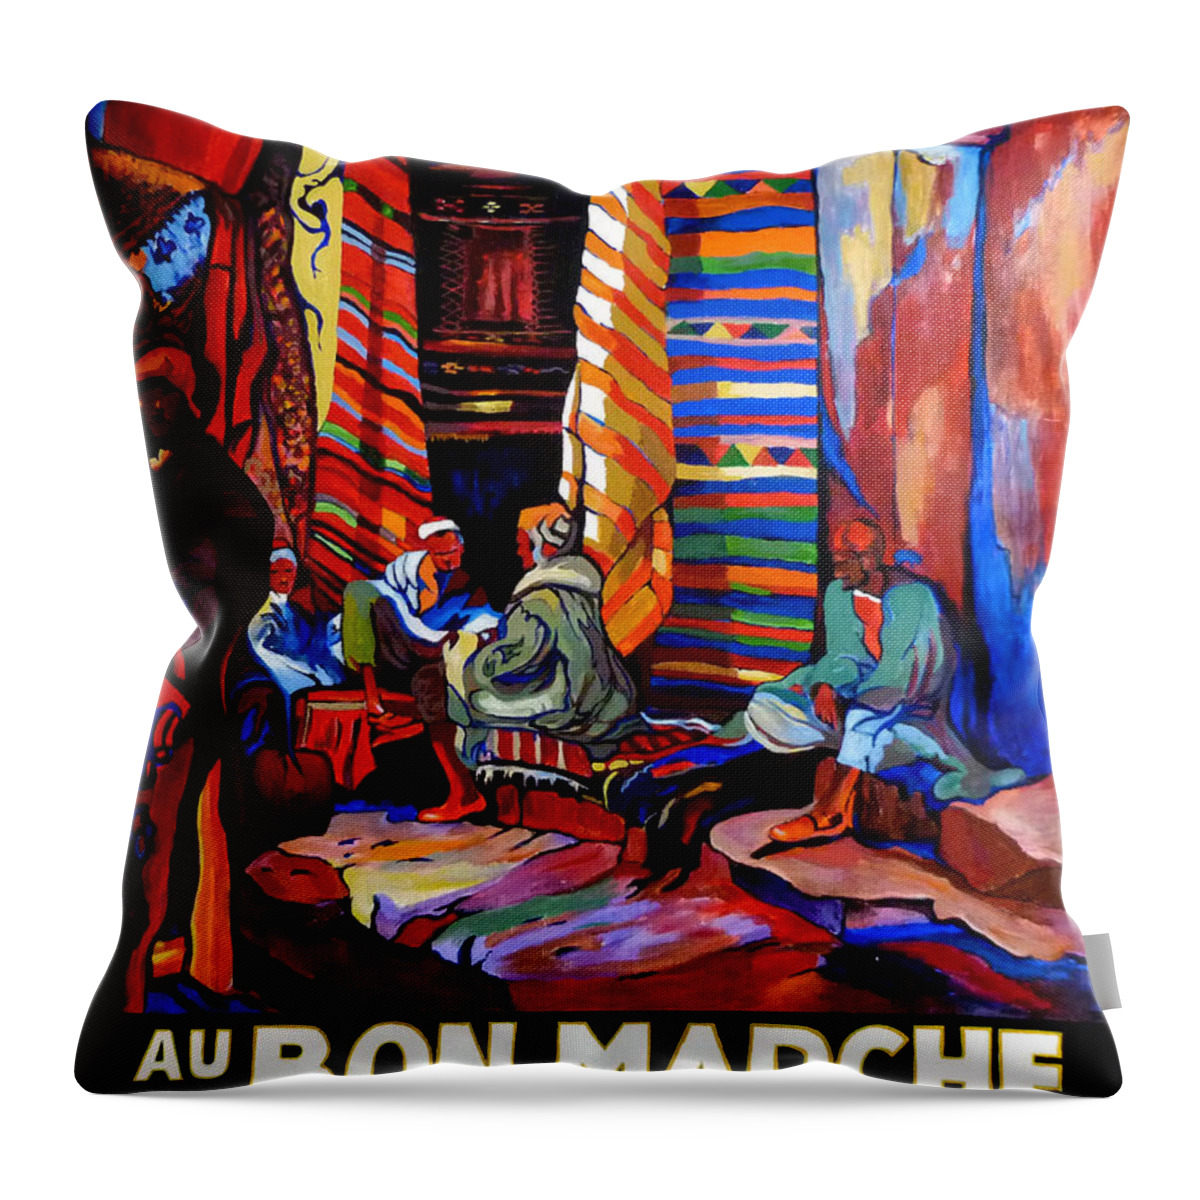 Au Bon Marche Throw Pillow featuring the painting Au Bon Marche by Tom Roderick